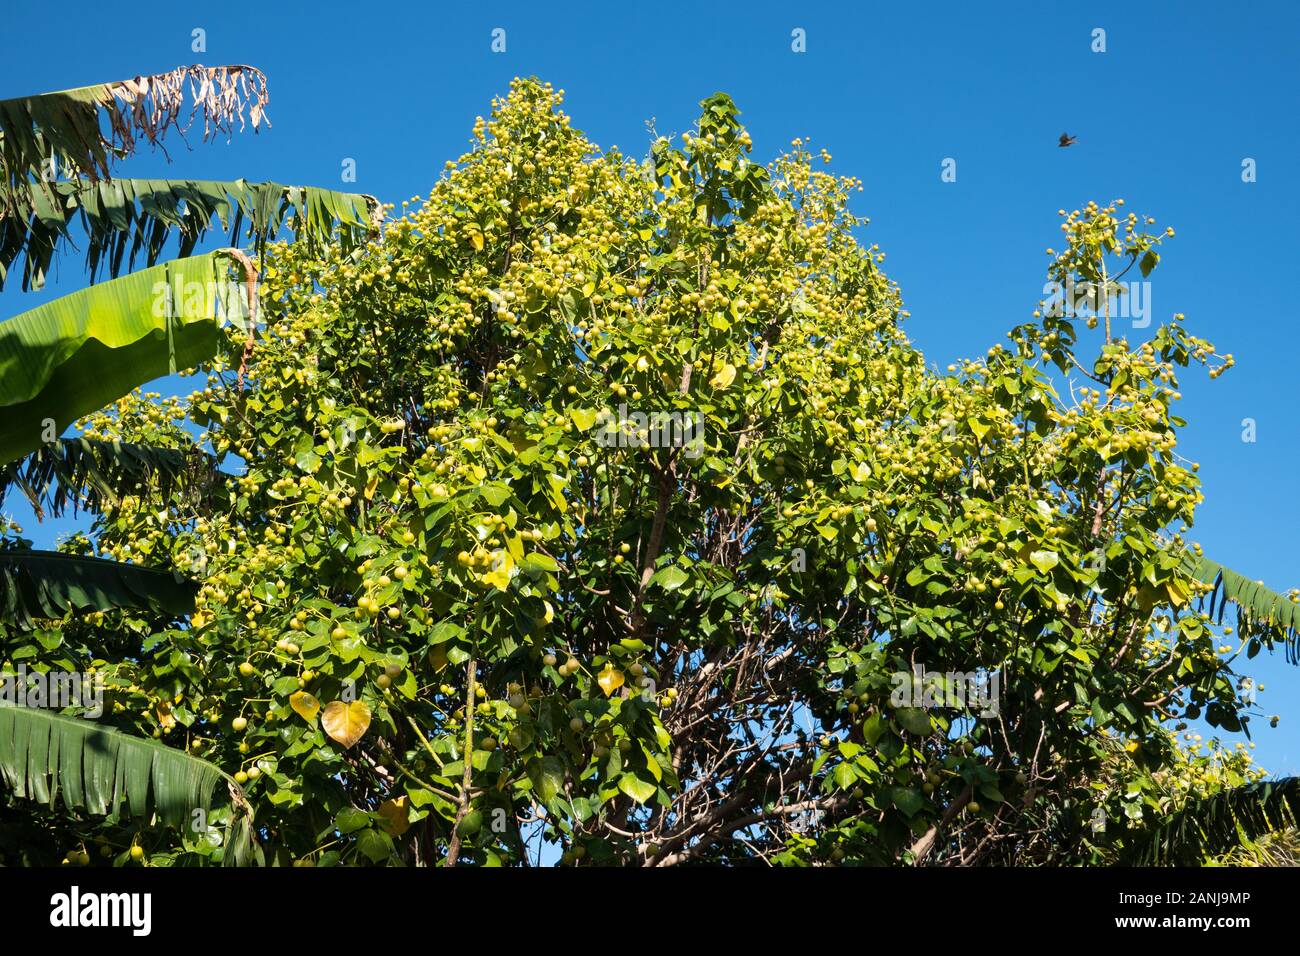 Hernandia Nymphaeifolia - Lantern tree with fruits on the branches Stock Photo